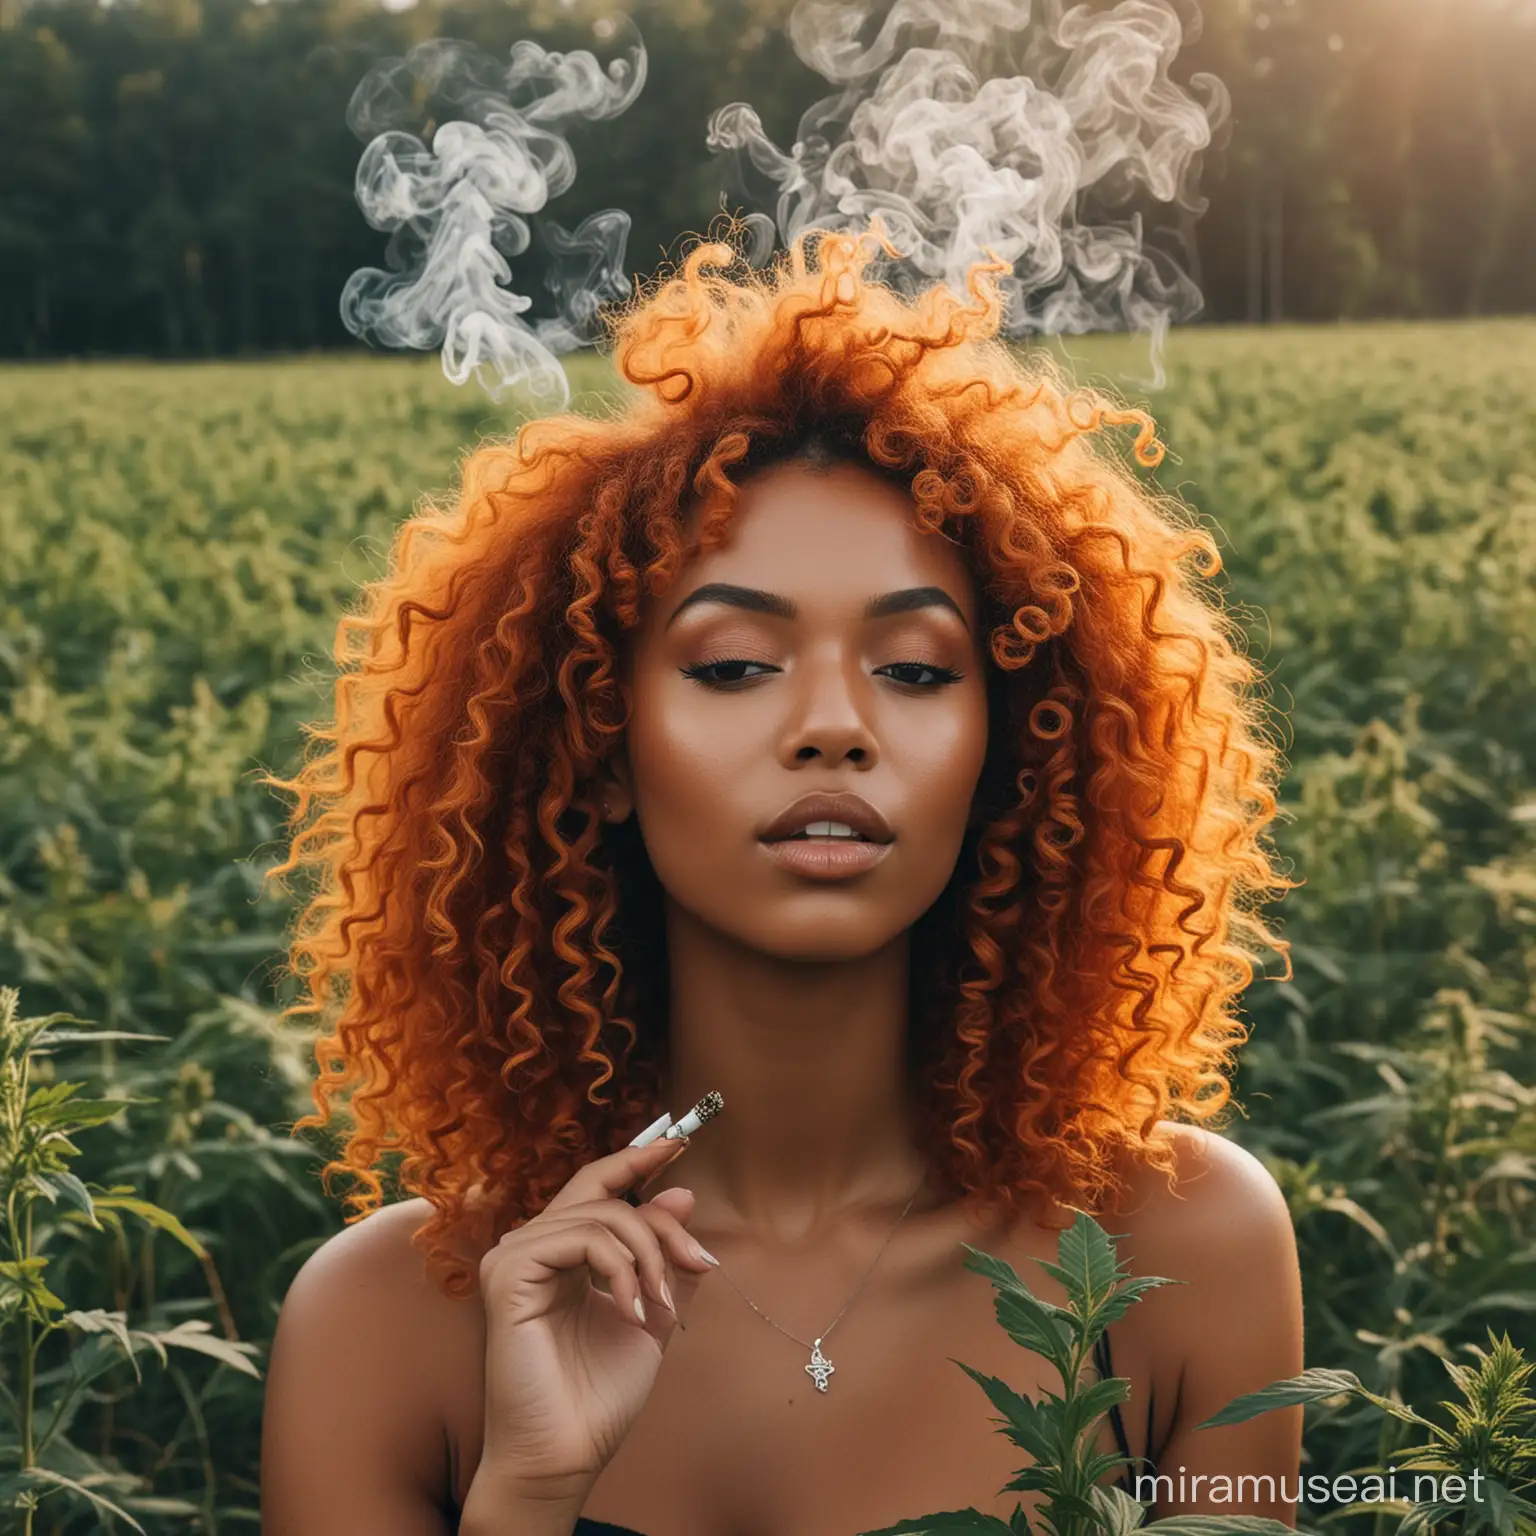 Stylish Black Woman with Ginger Curls Enjoying Cannabis Amidst Lush Fields